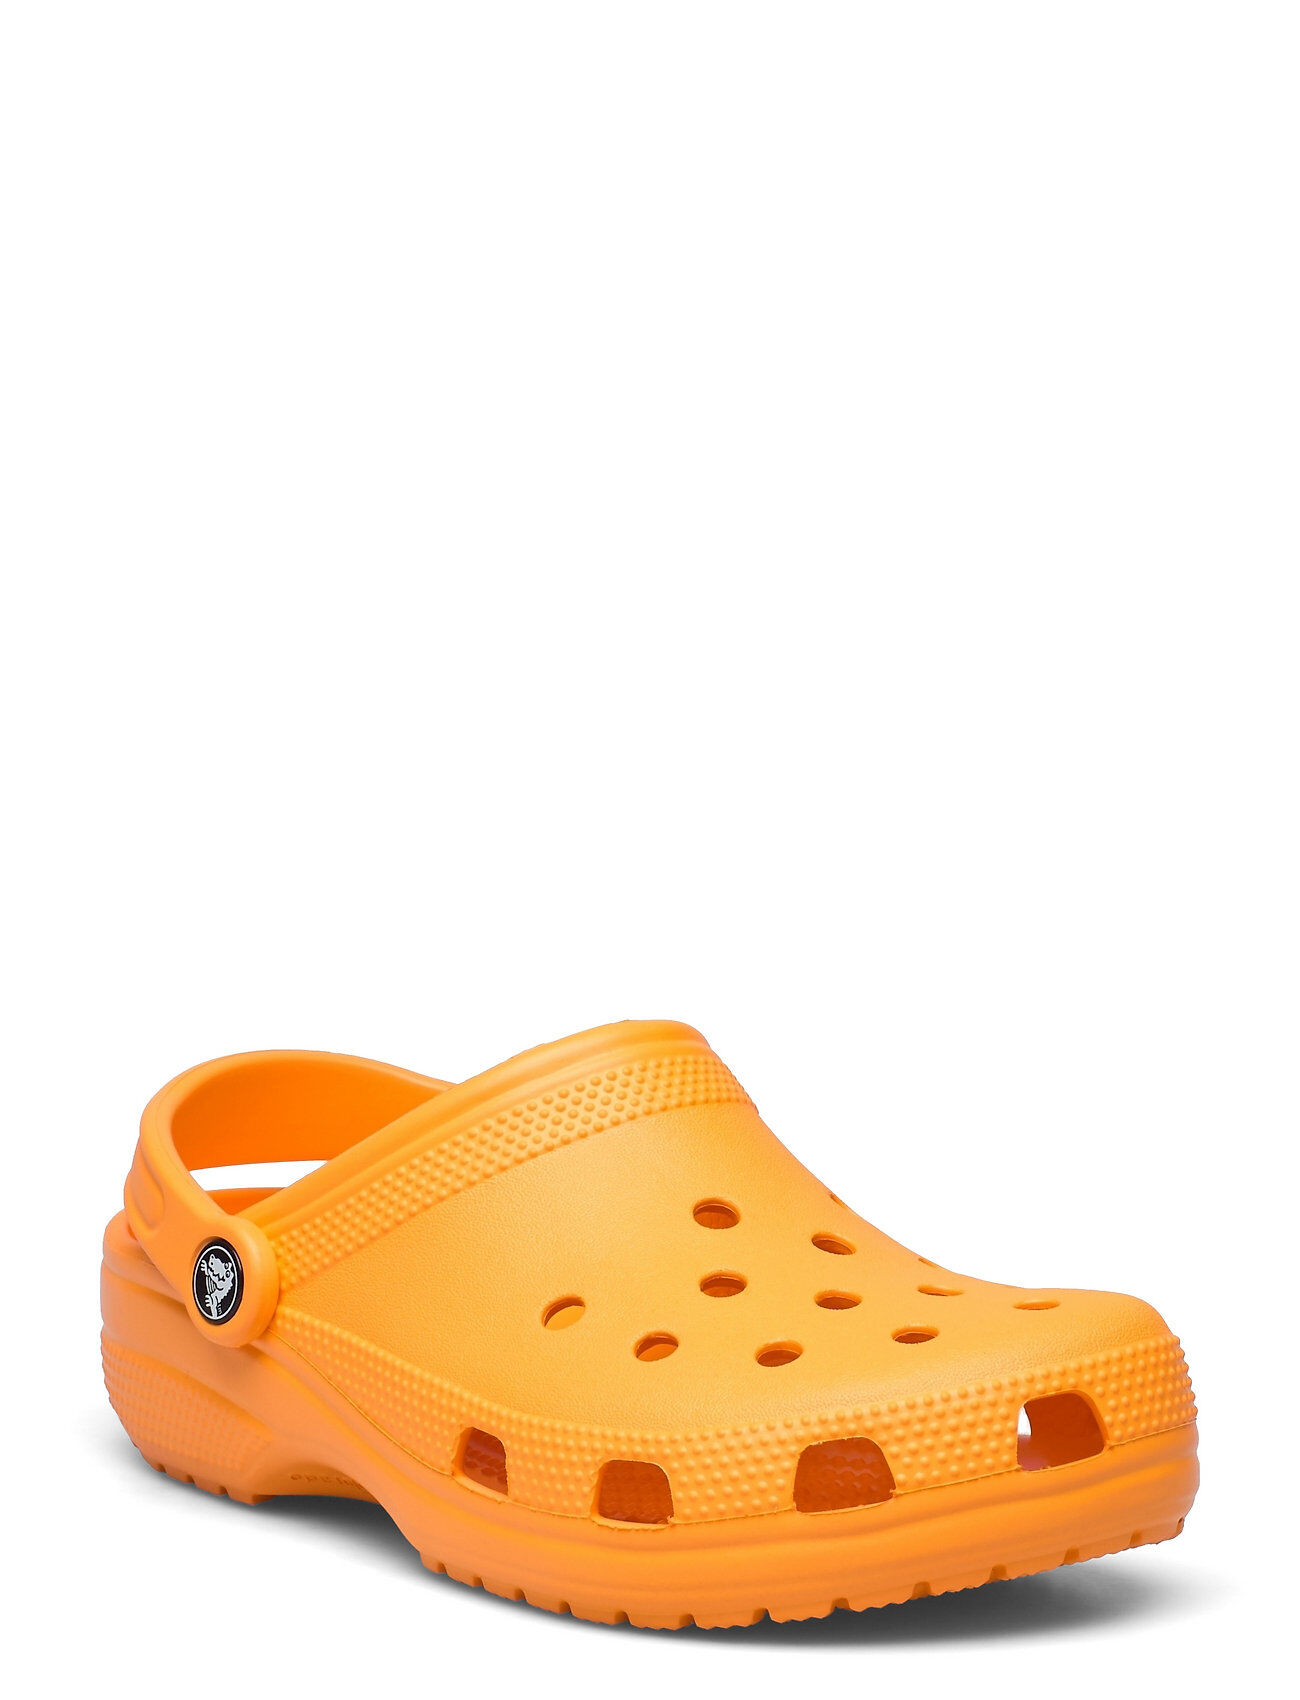 Crocs Classic Shoes Summer Shoes Sandals Oransje Crocs